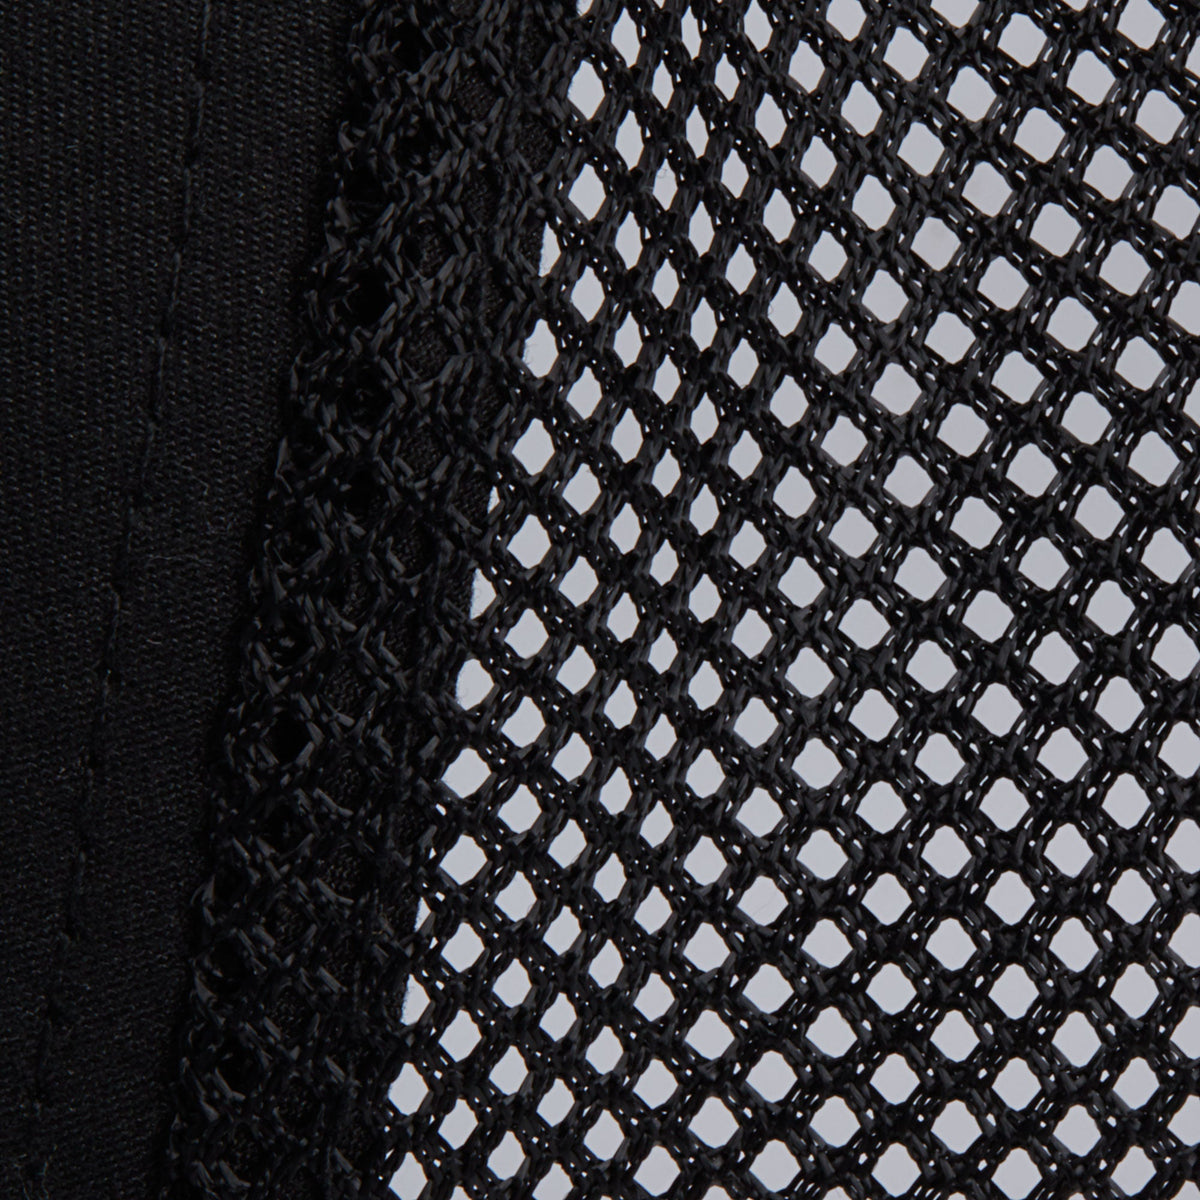 mesh hat closeup